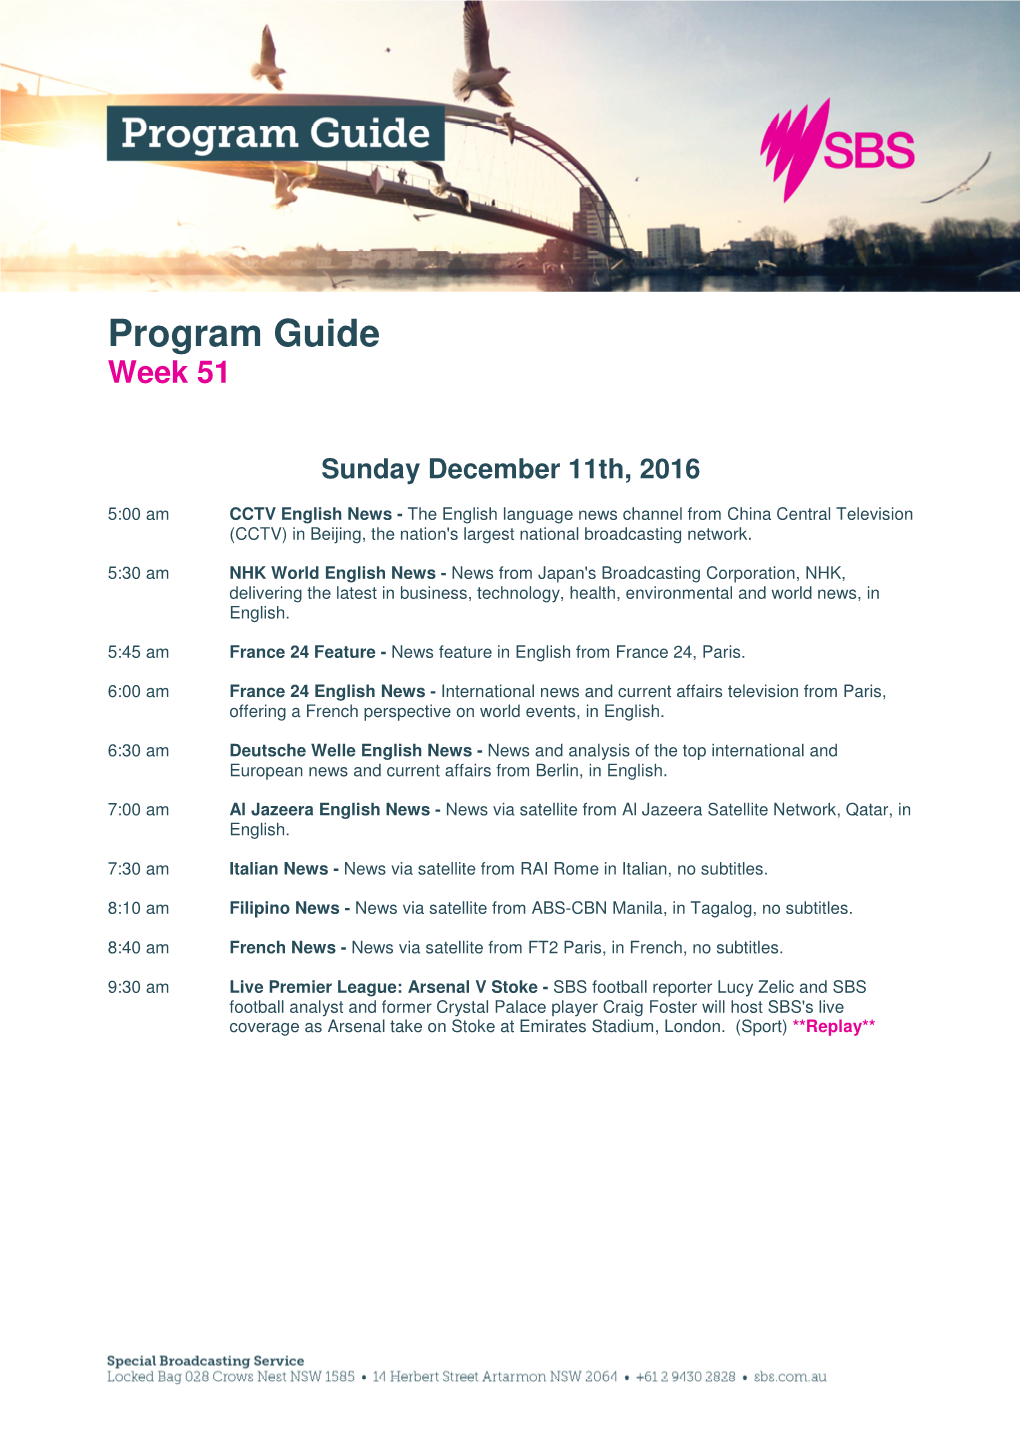 Program Guide Week 51